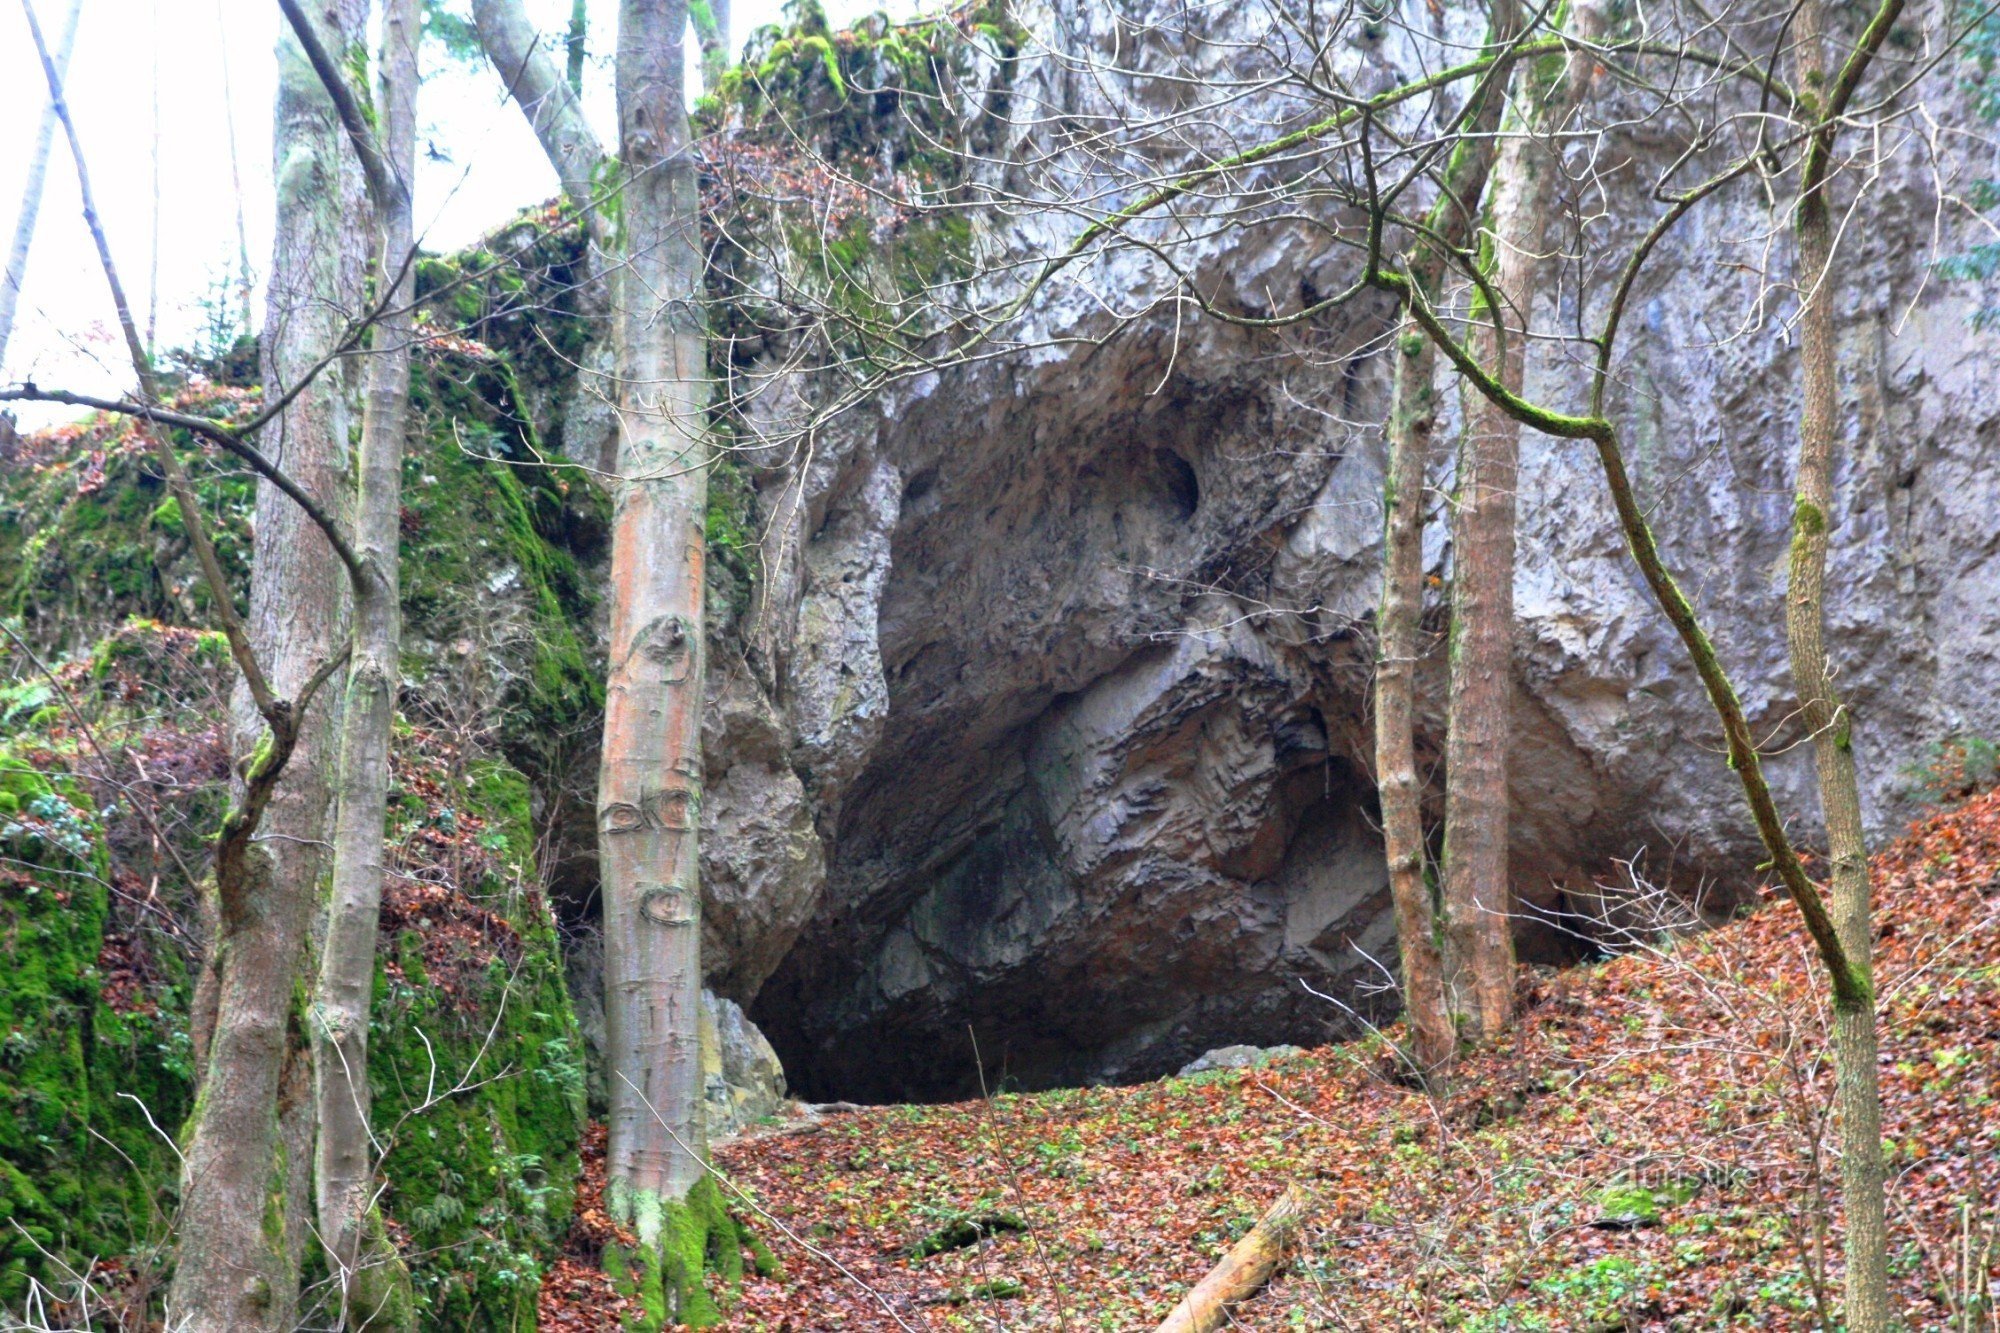 The massive entrance portal of the Urbanice cave